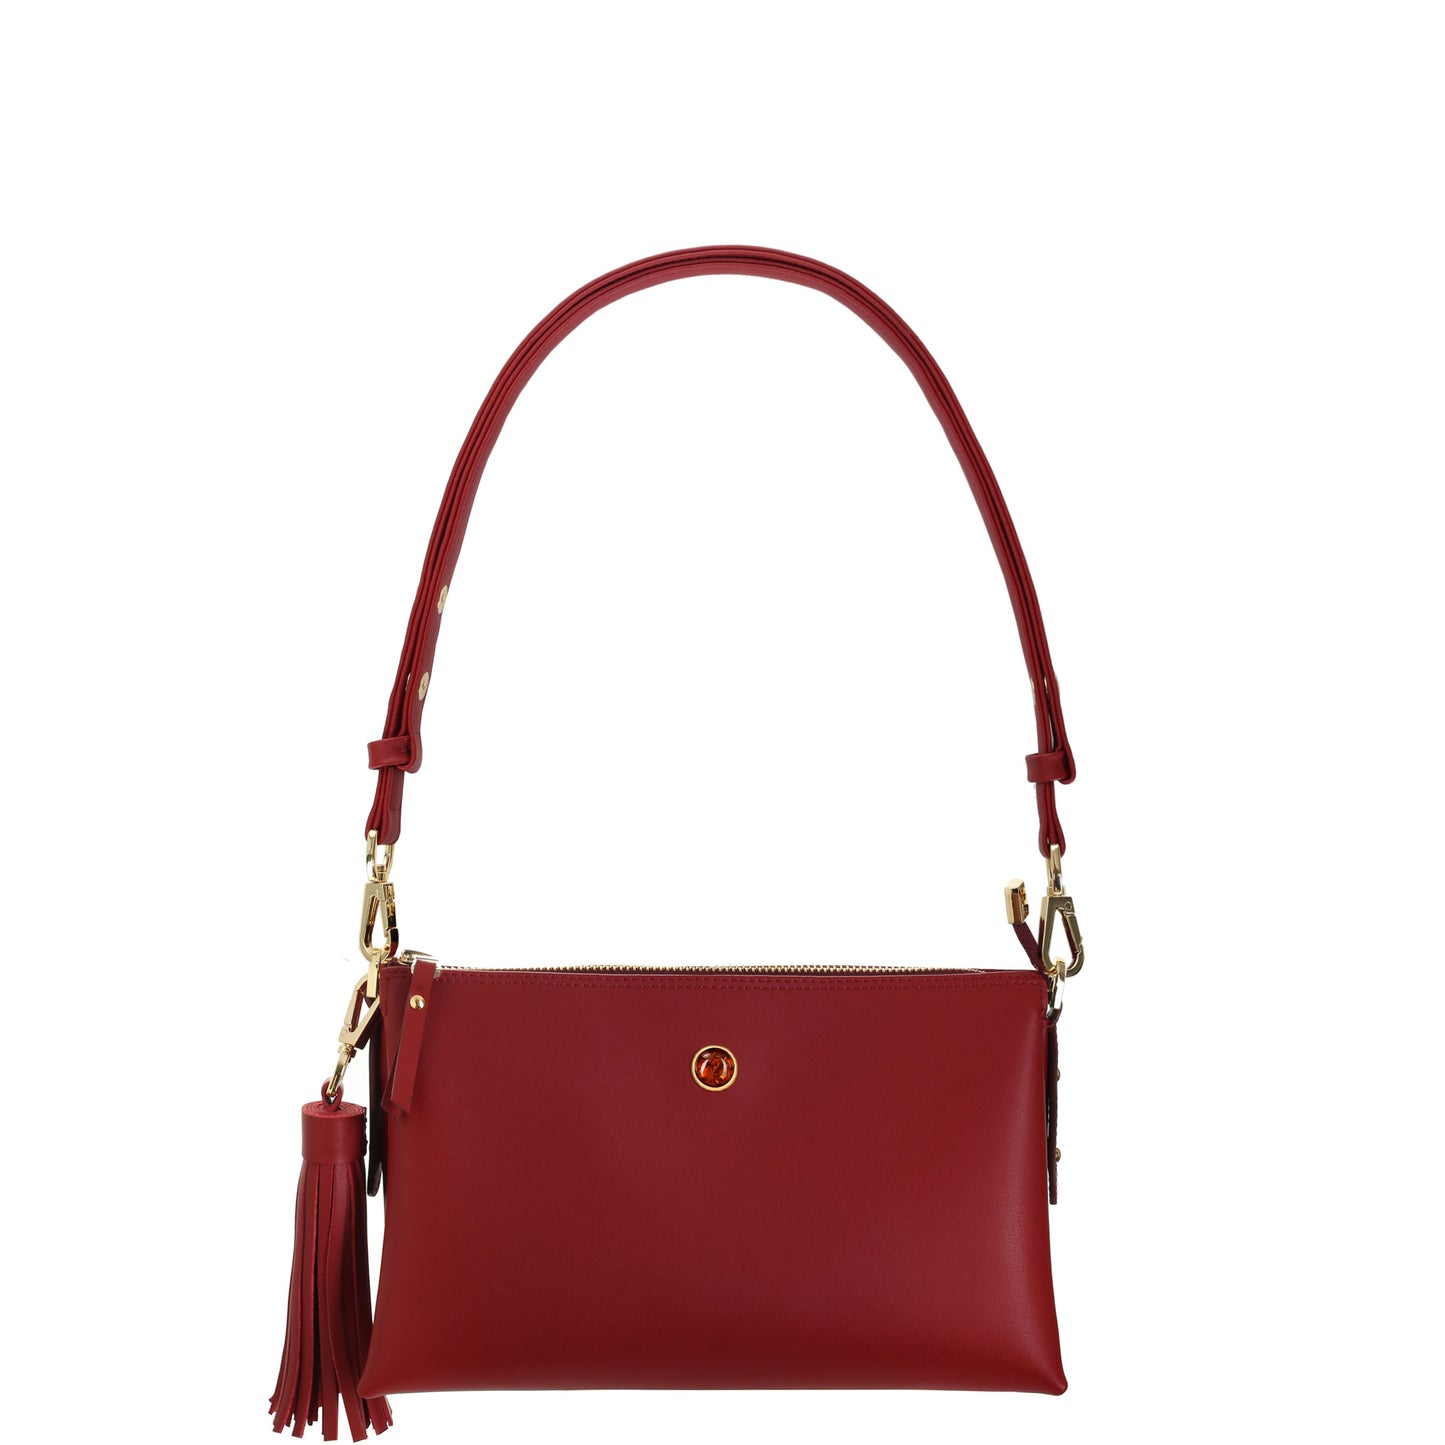 ELISE NAPA burgundy women's leather handbag